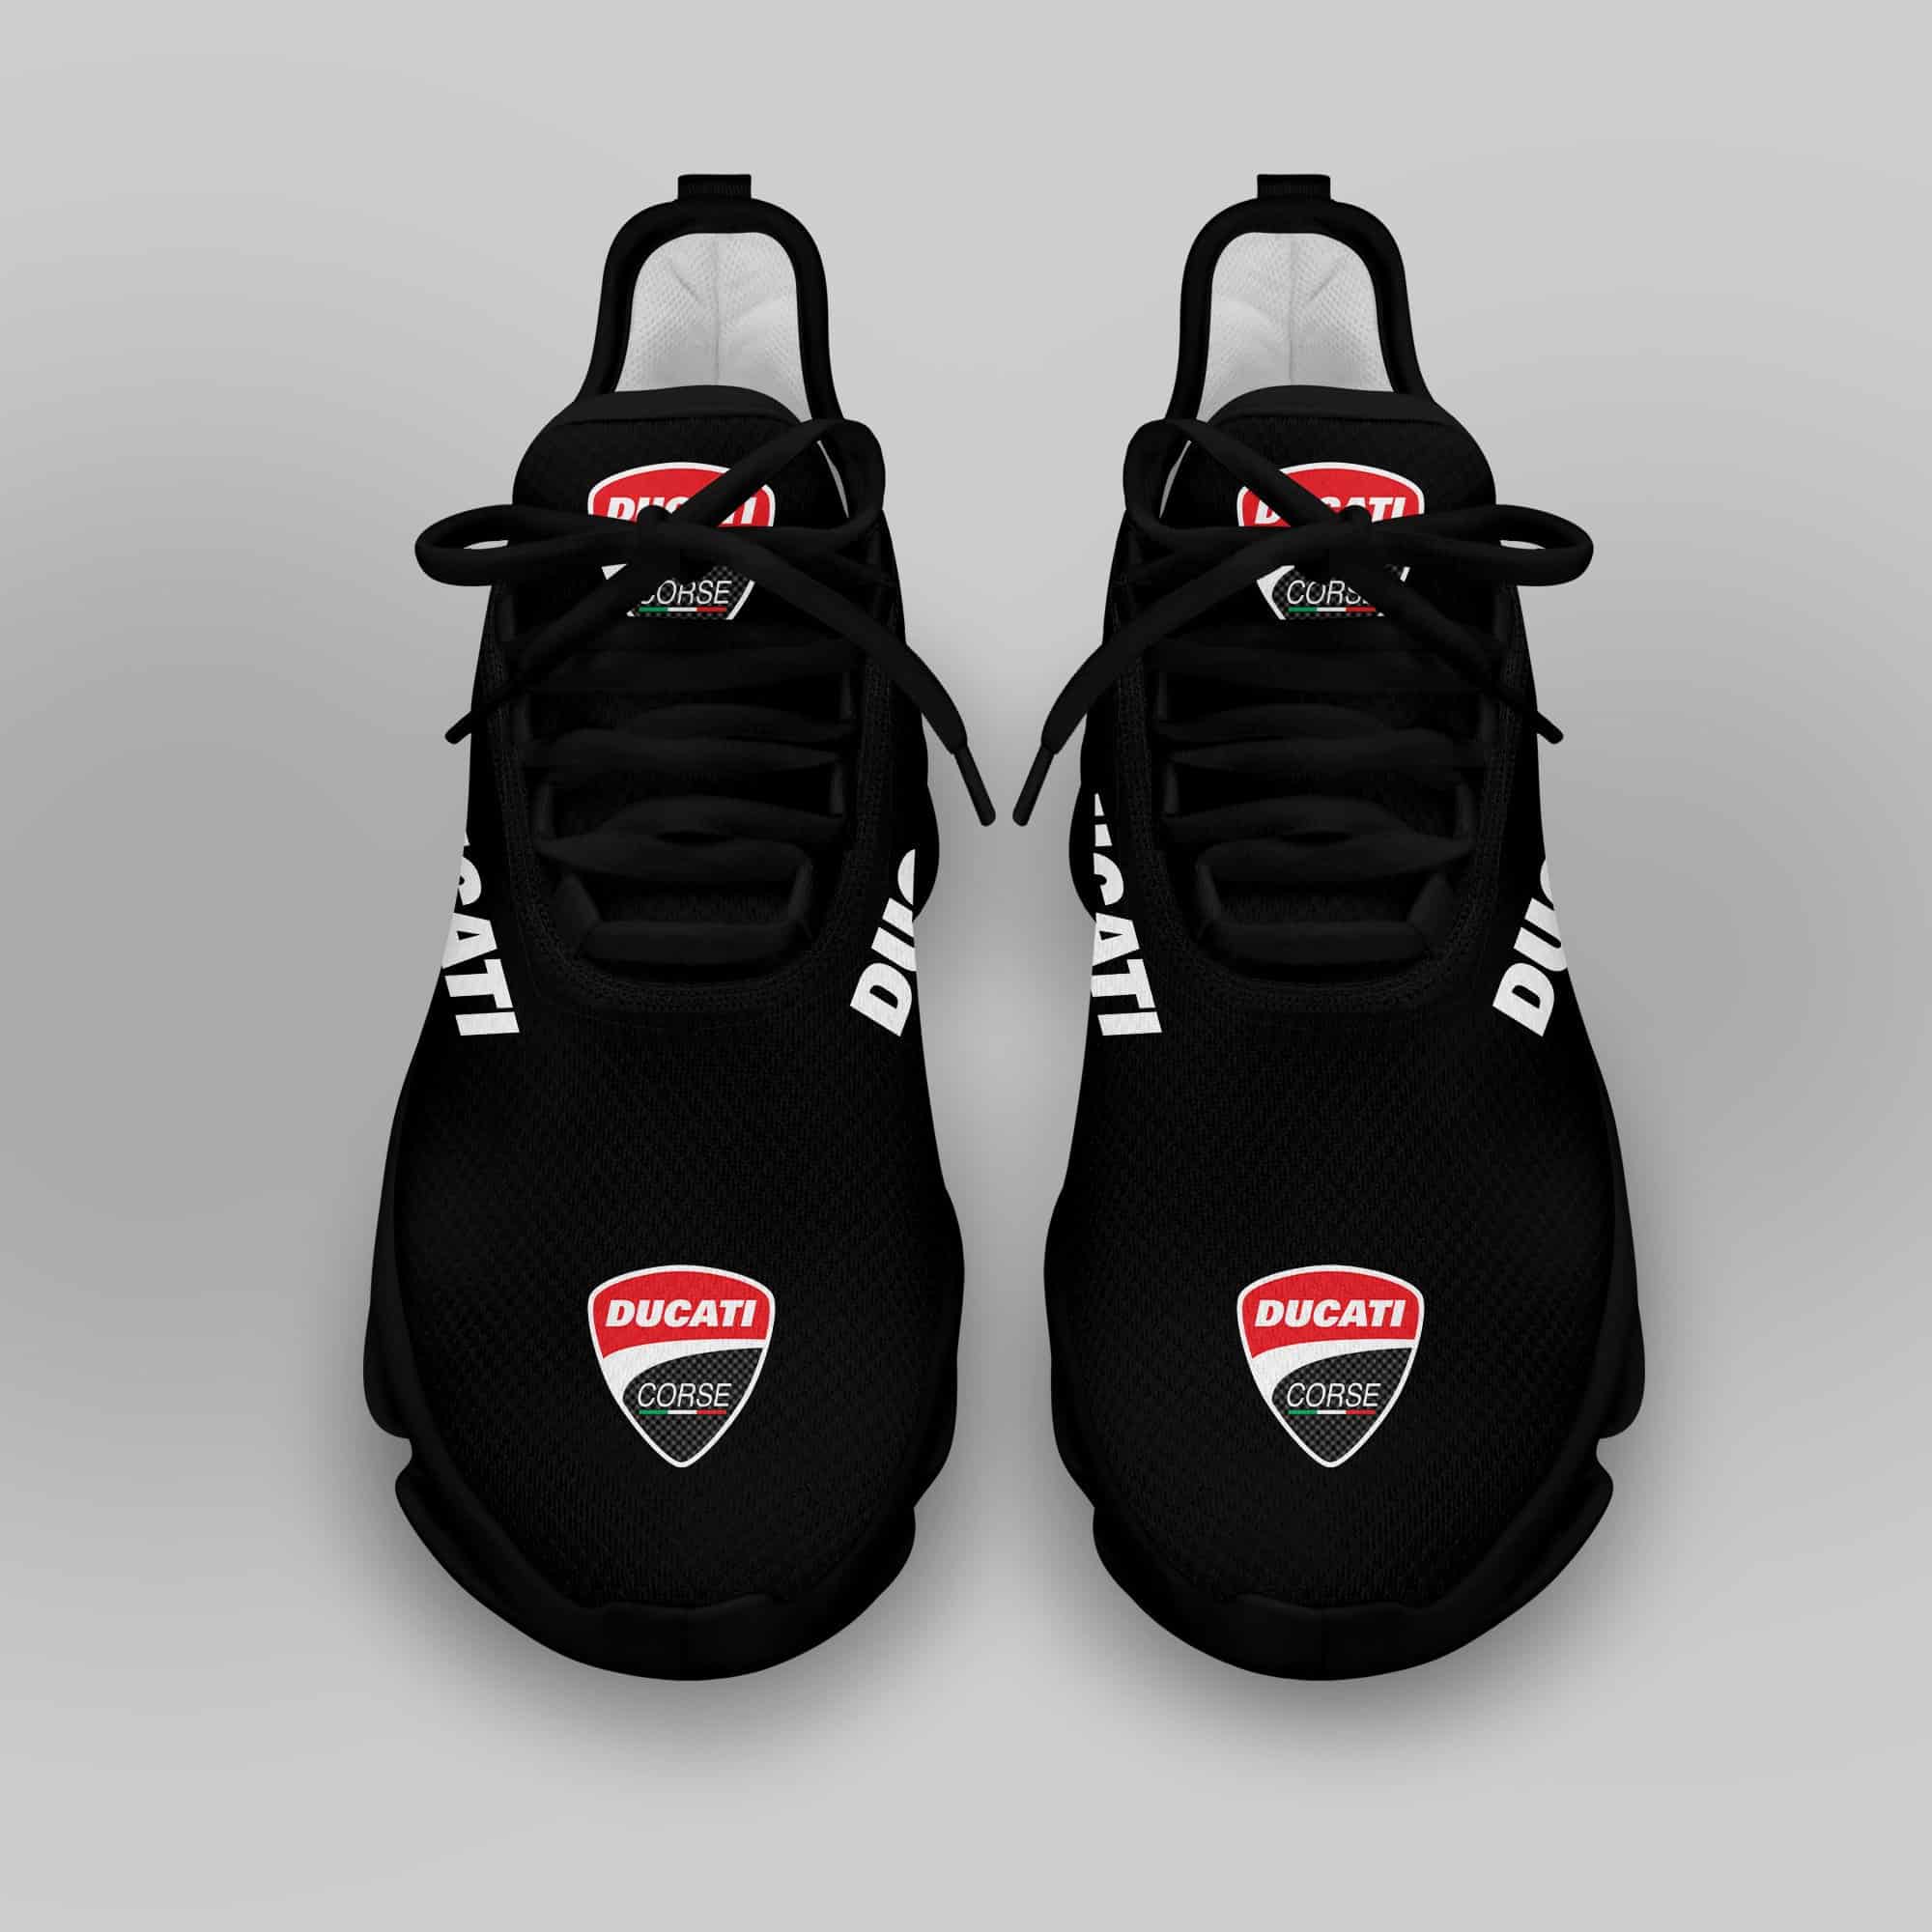 Ducati Racing Running Shoes Max Soul Shoes Sneakers Ver 34 4